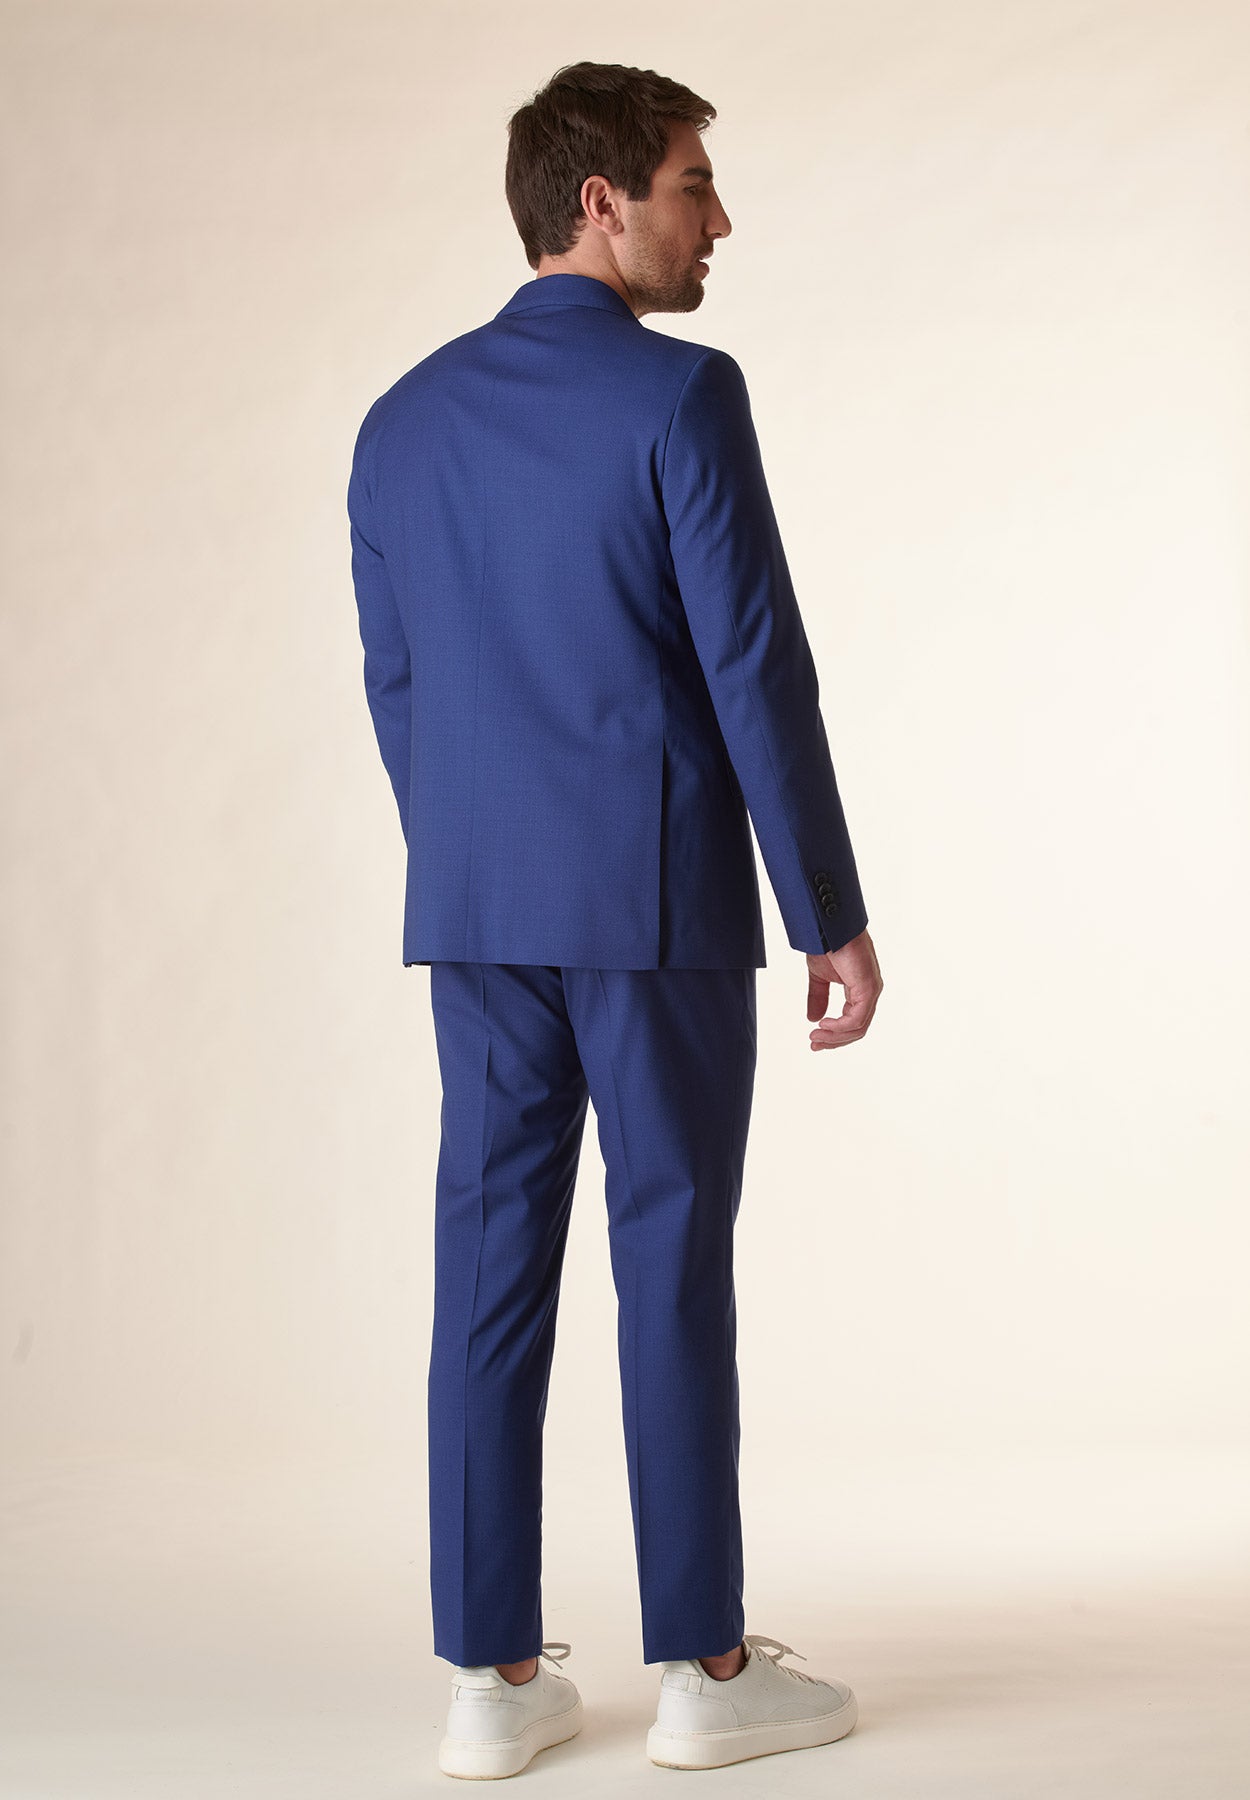 Bluette microstructured wool custom fit suit